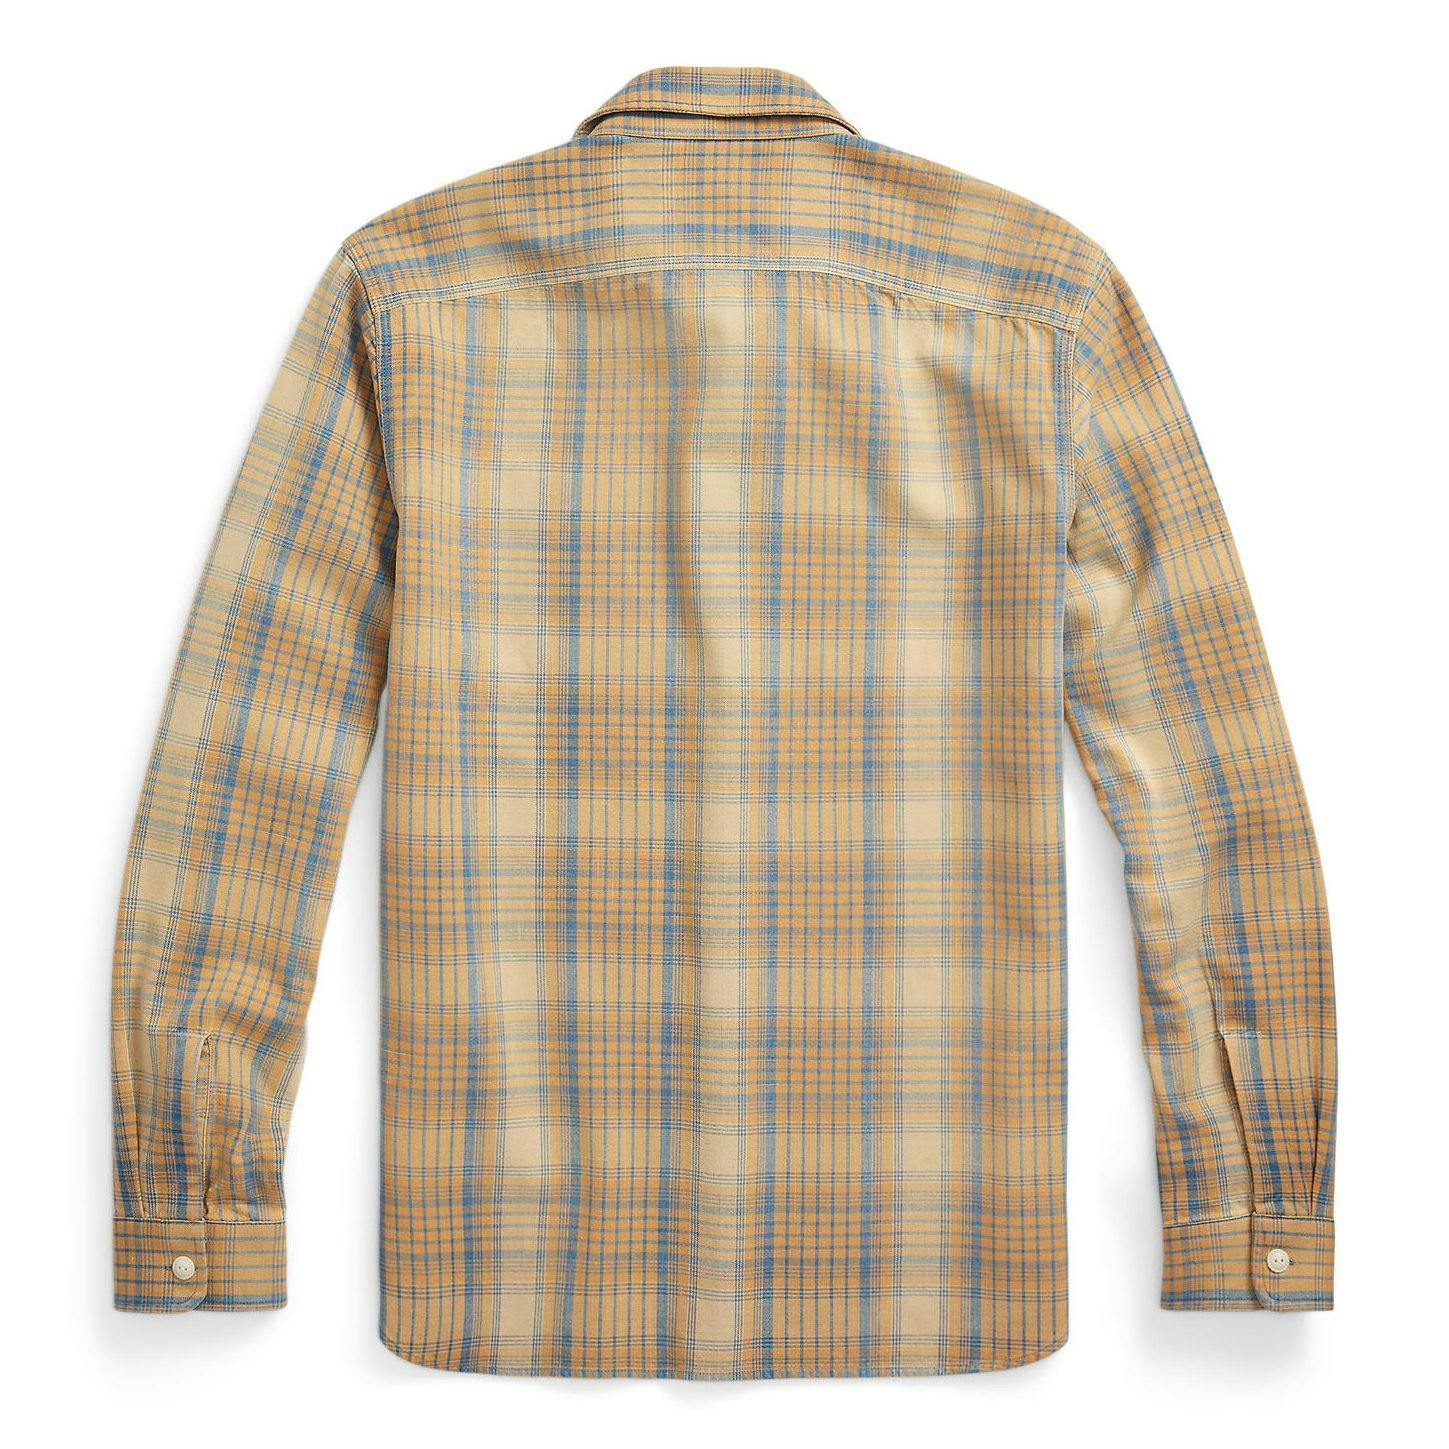 Vintage 100% Cotton Blue/Yellow Plaid Medium Long Sleeve Shirt